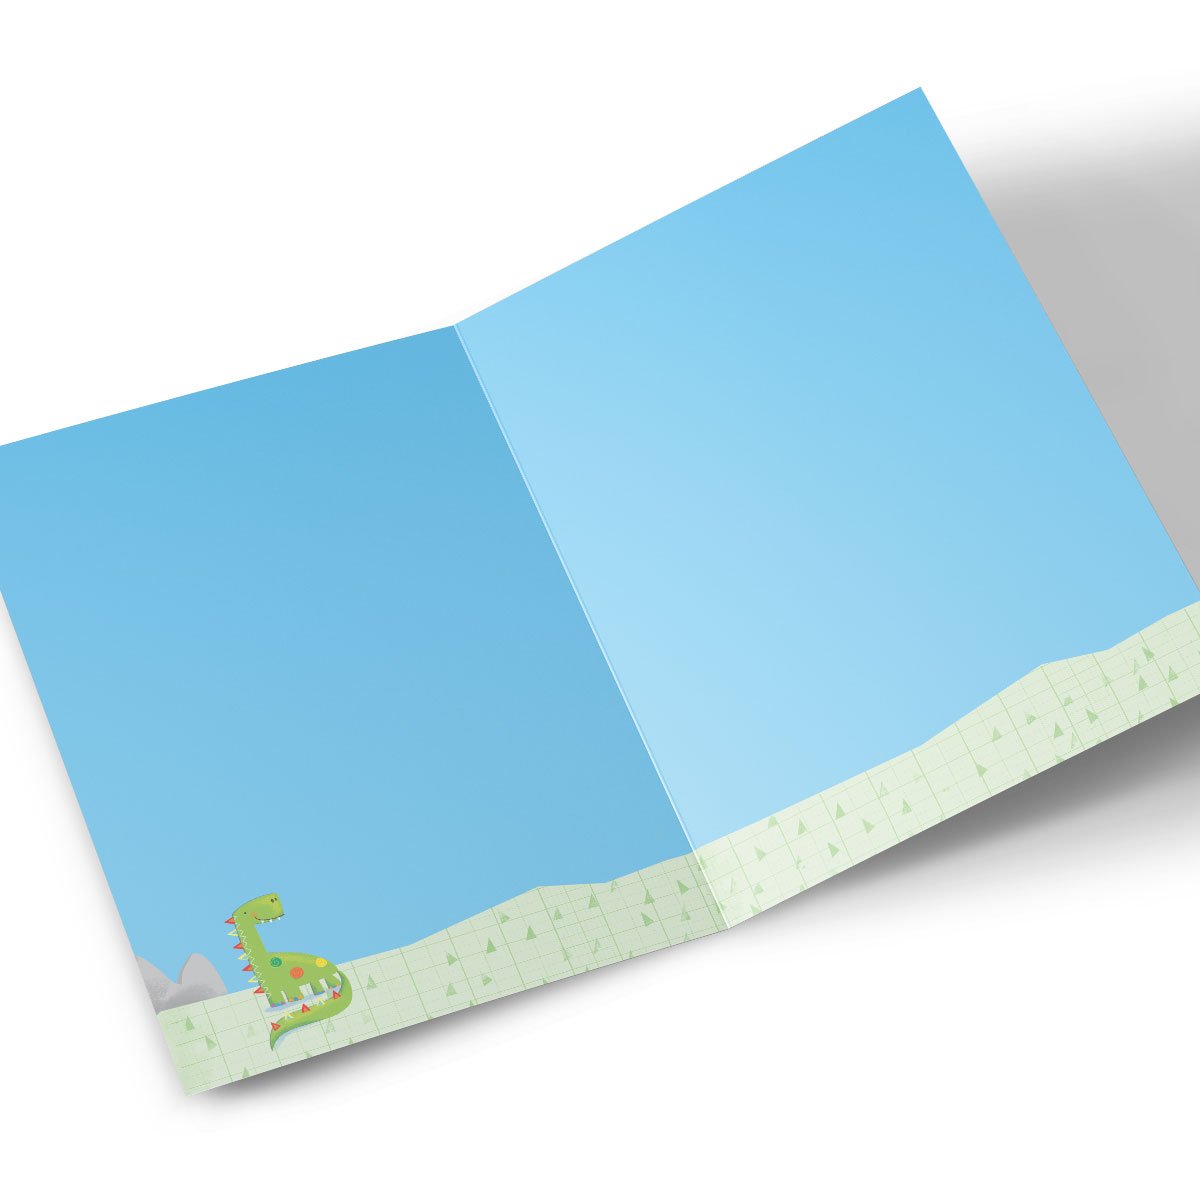 Personalised Any Age Birthday Card - Green Dinosaur [Any recipient]